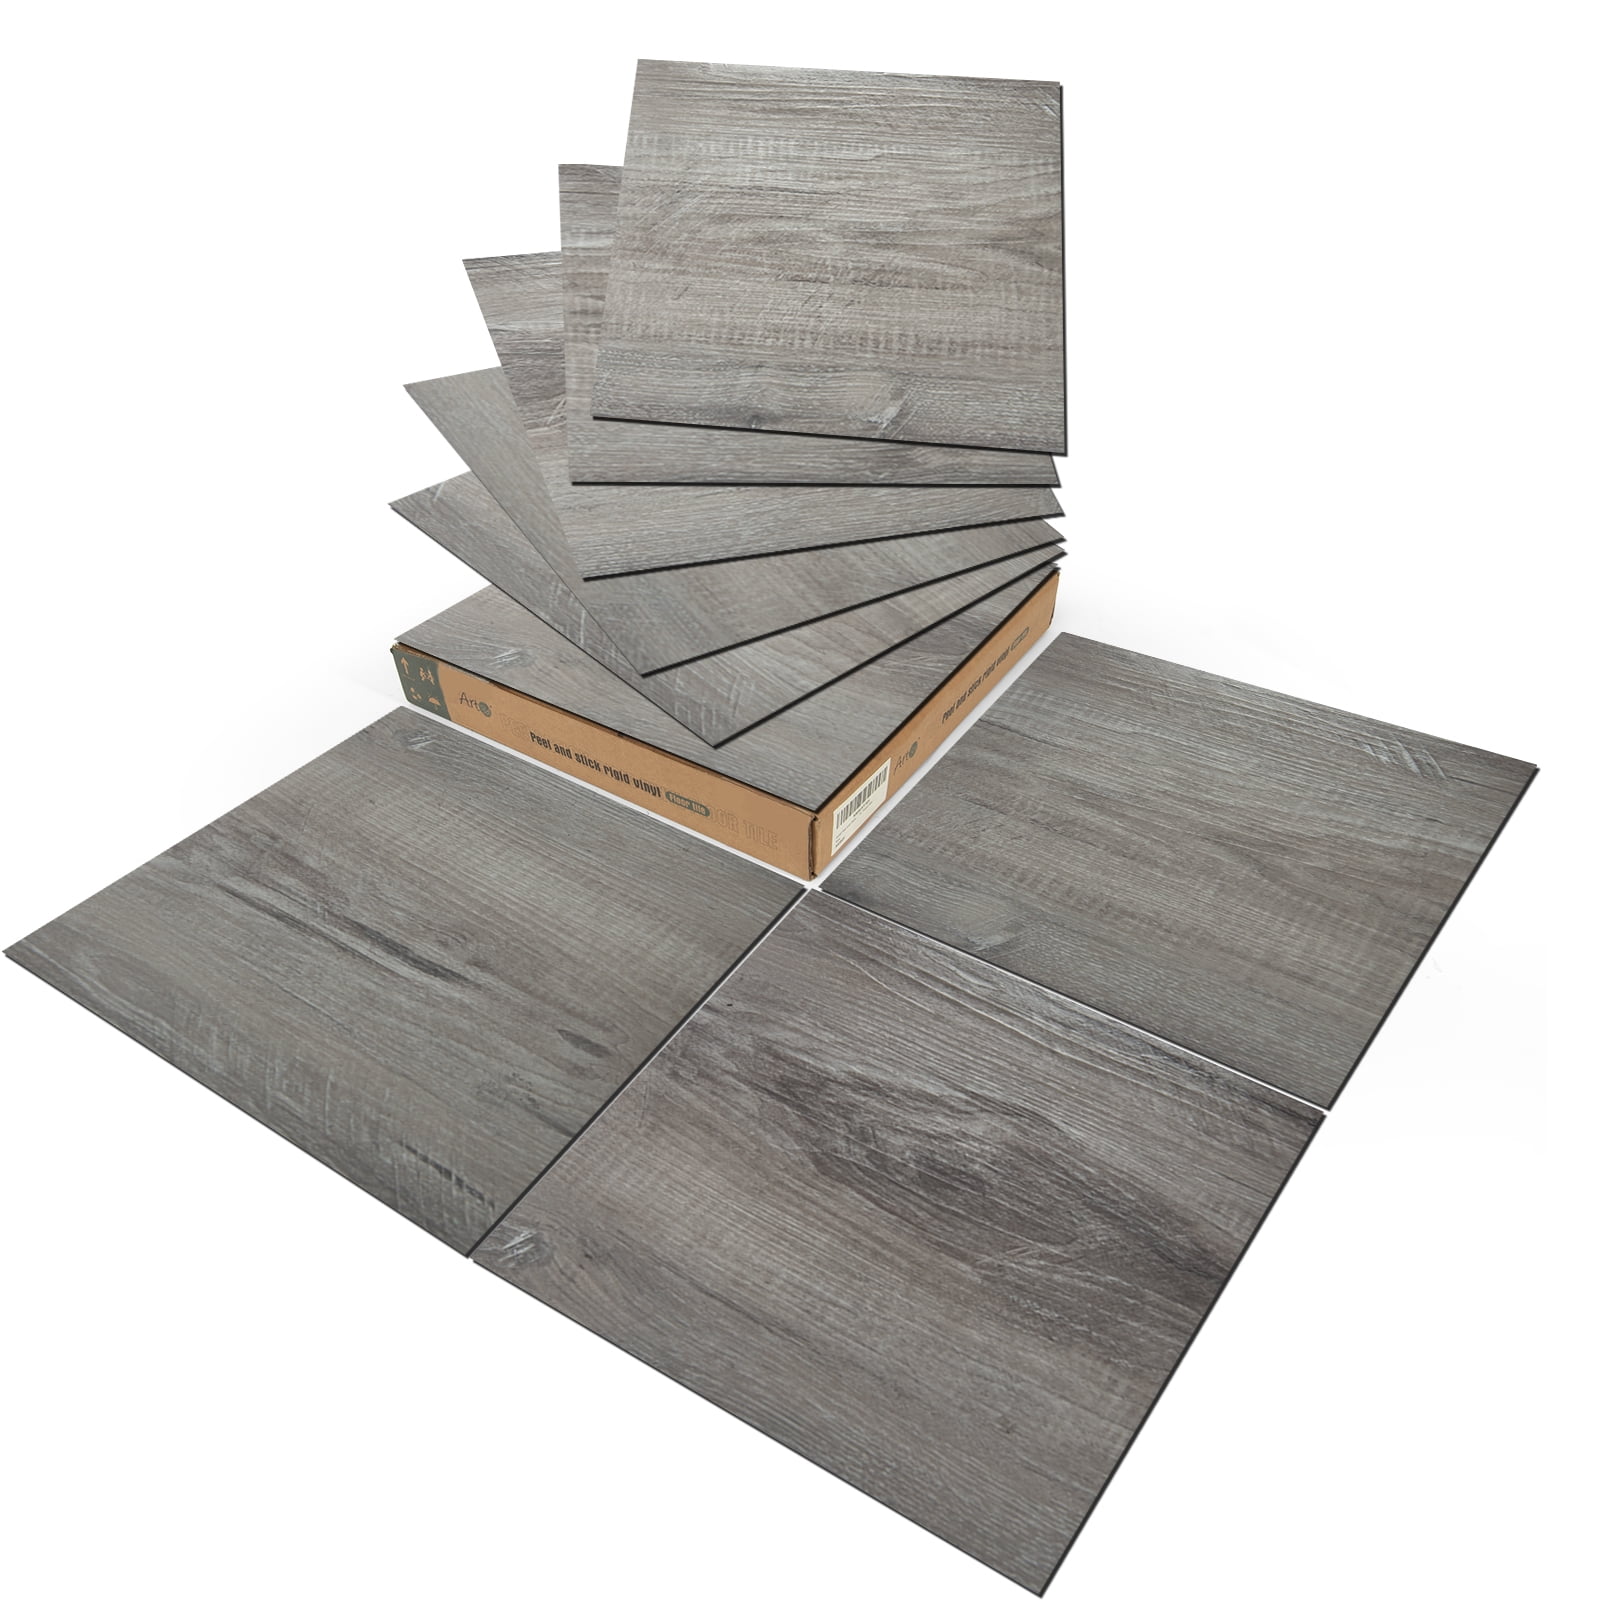 Art3d Peel and Stick Vinyl Floor Tiles 30-Pack 12 x 12 inch, Self Adhesive  Waterproof Flooring Wood Planks for Kitchen, Dining Room, Bedrooms, Cover  30 Sq. Ft, Ebony